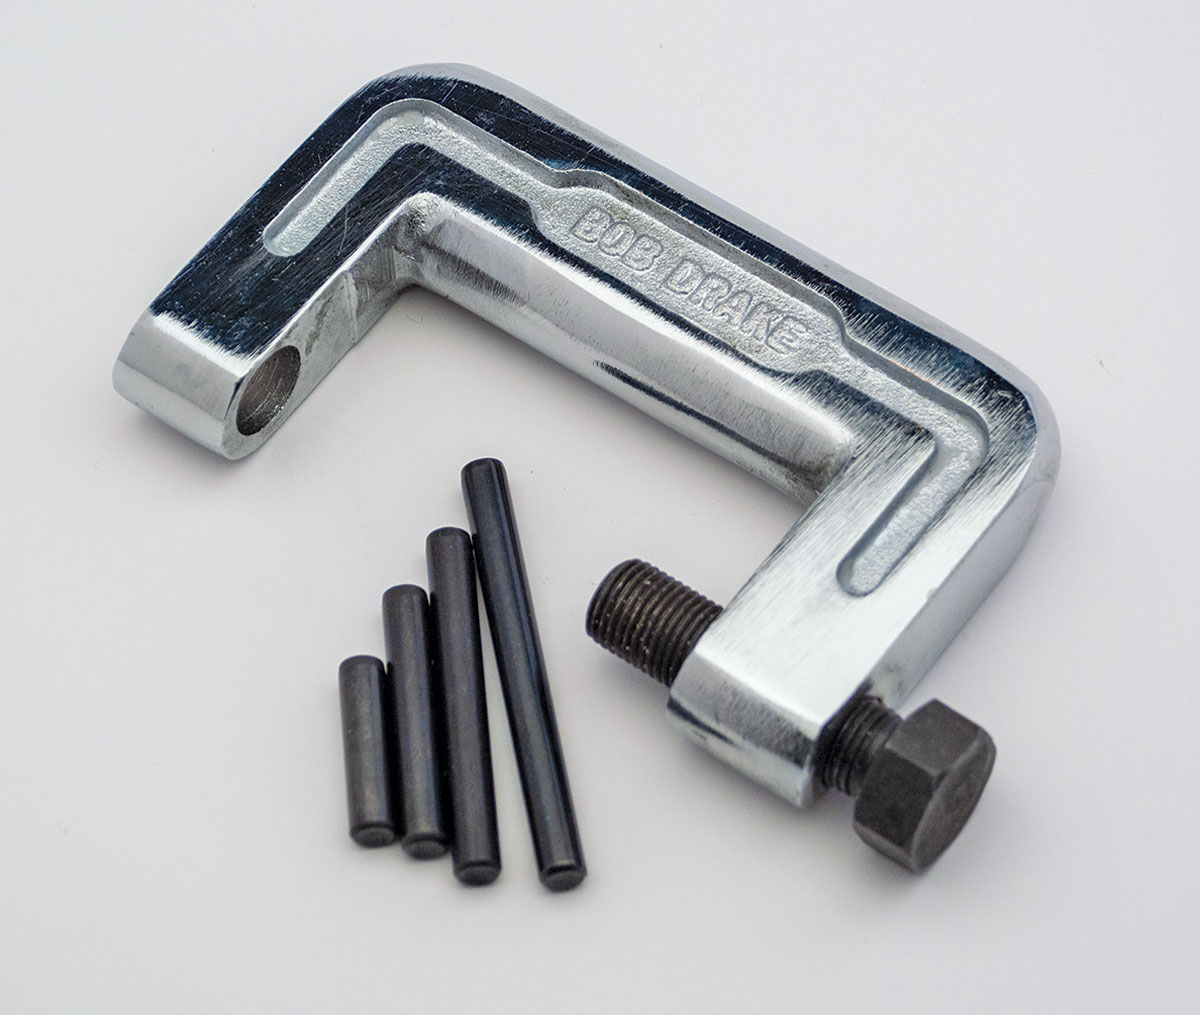 The hinge pin press available from Bob Drake Reproductions